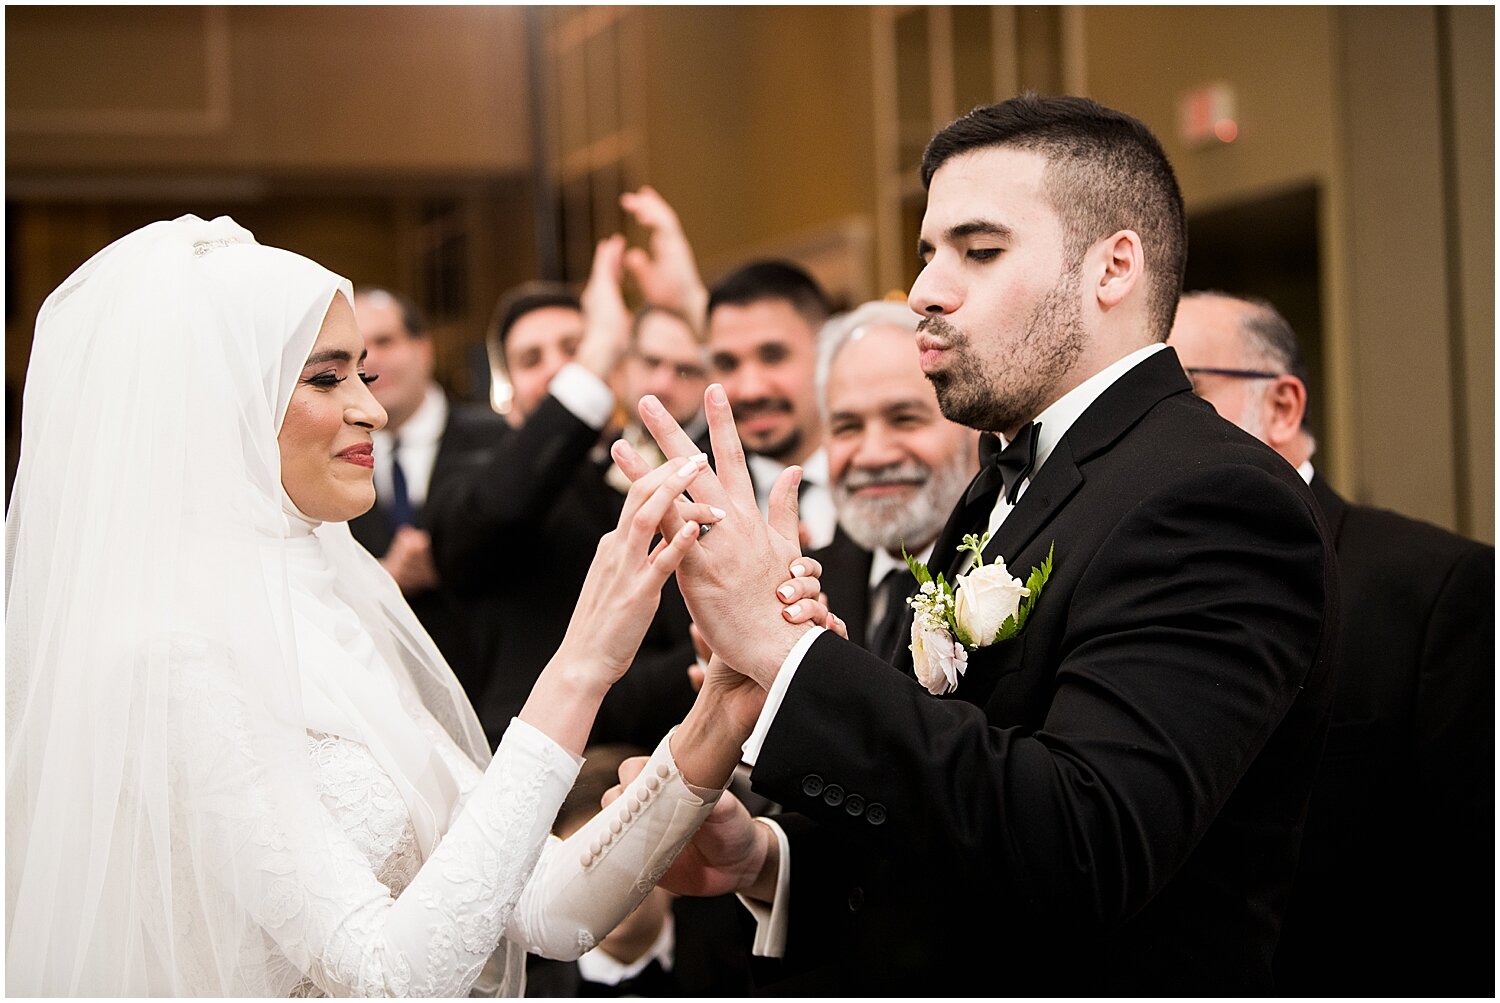 https://images.squarespace-cdn.com/content/v1/5ce4254e19f29900013d6333/1587421036698-0QPOCHHZUTJ89SRJXKM7/Chicago+Palestinian+Egyptian+Arab+Muslim+Wedding+Photography+Dinolfos+Banquets+Maha+Studios_0029.jpg